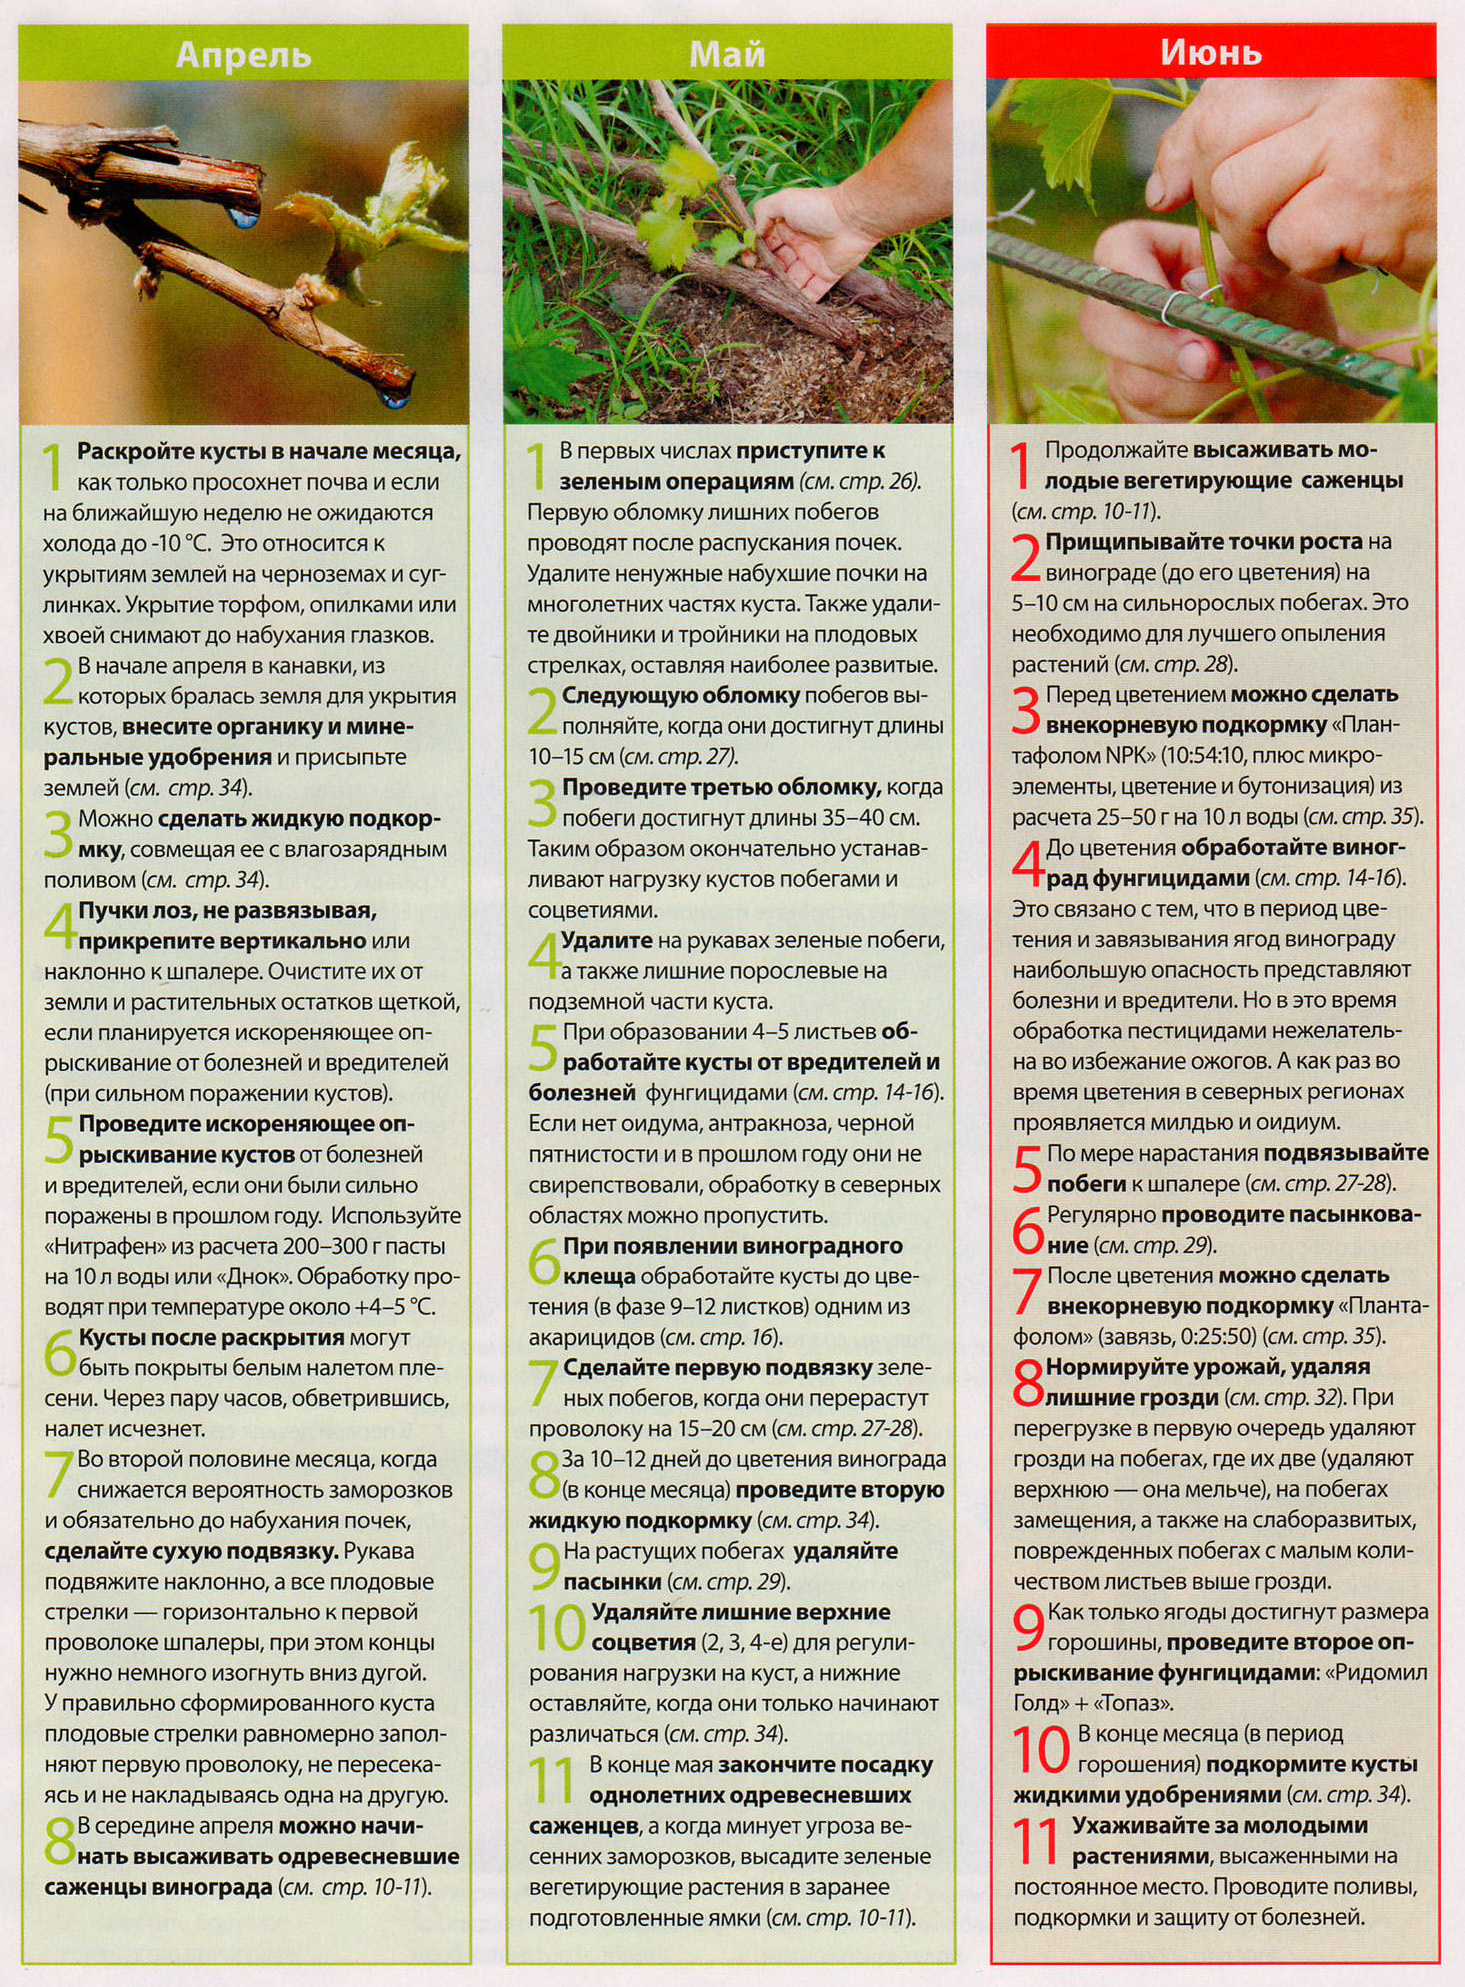 Виноград алешенькин: описание и характеристики сорта, посадка и уход с фото